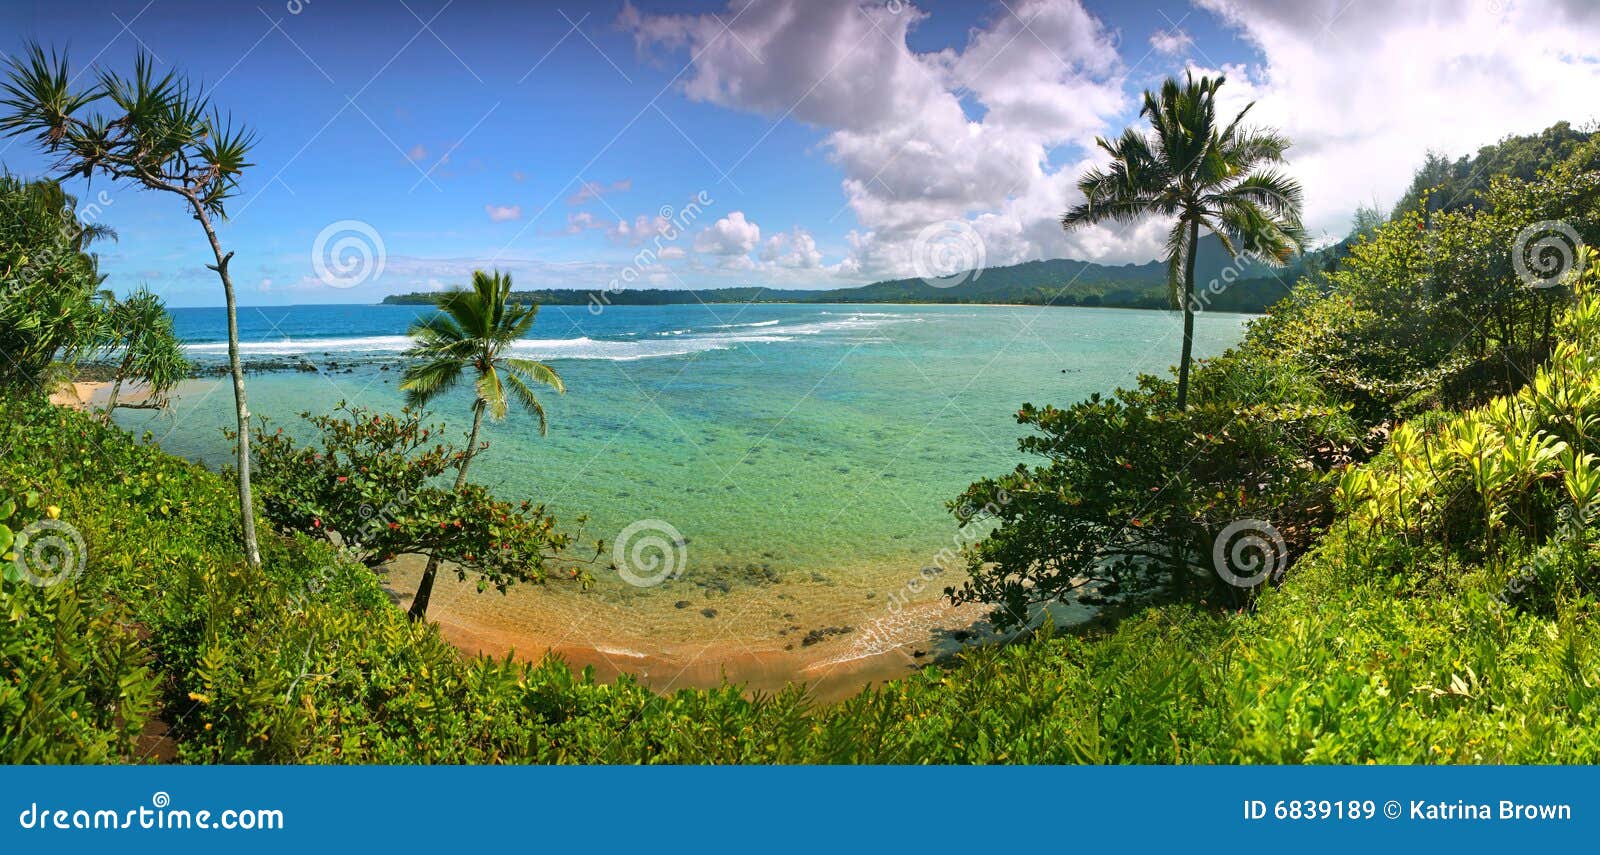 tropical resort view in kauai hawaii